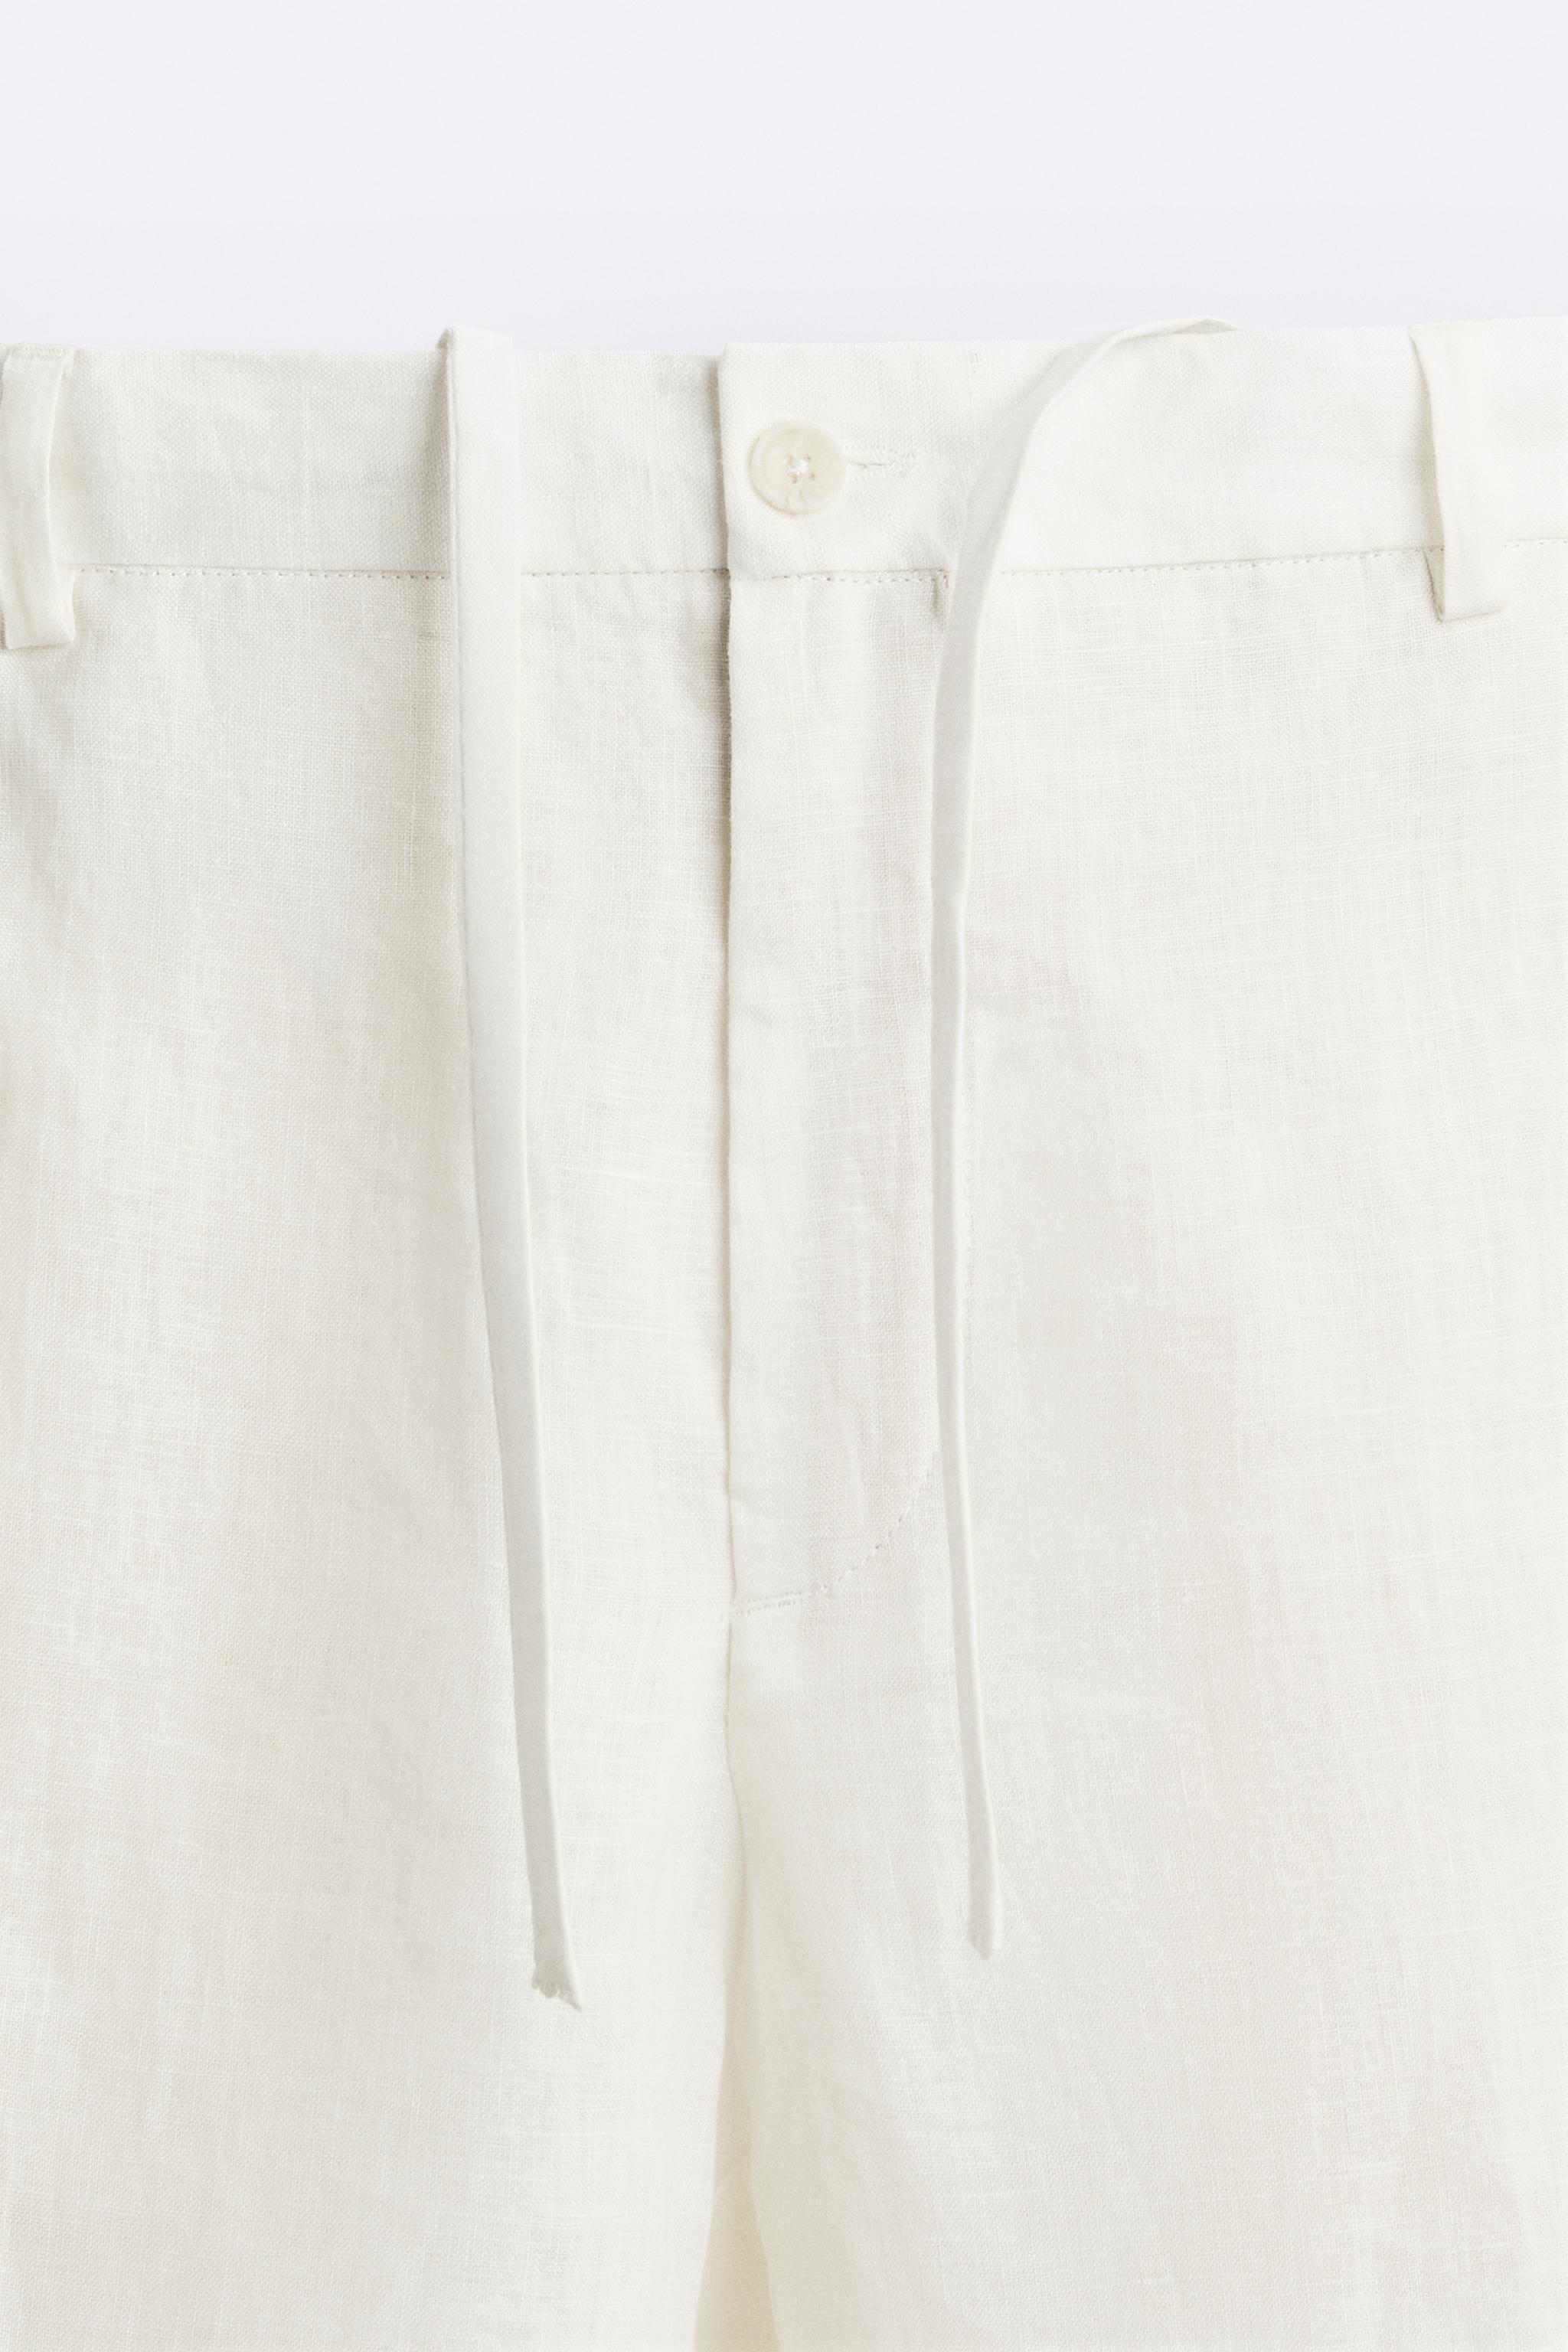 ZARA Oyster White High Waist Lace Detail Linen Trousers Pants 3239/936